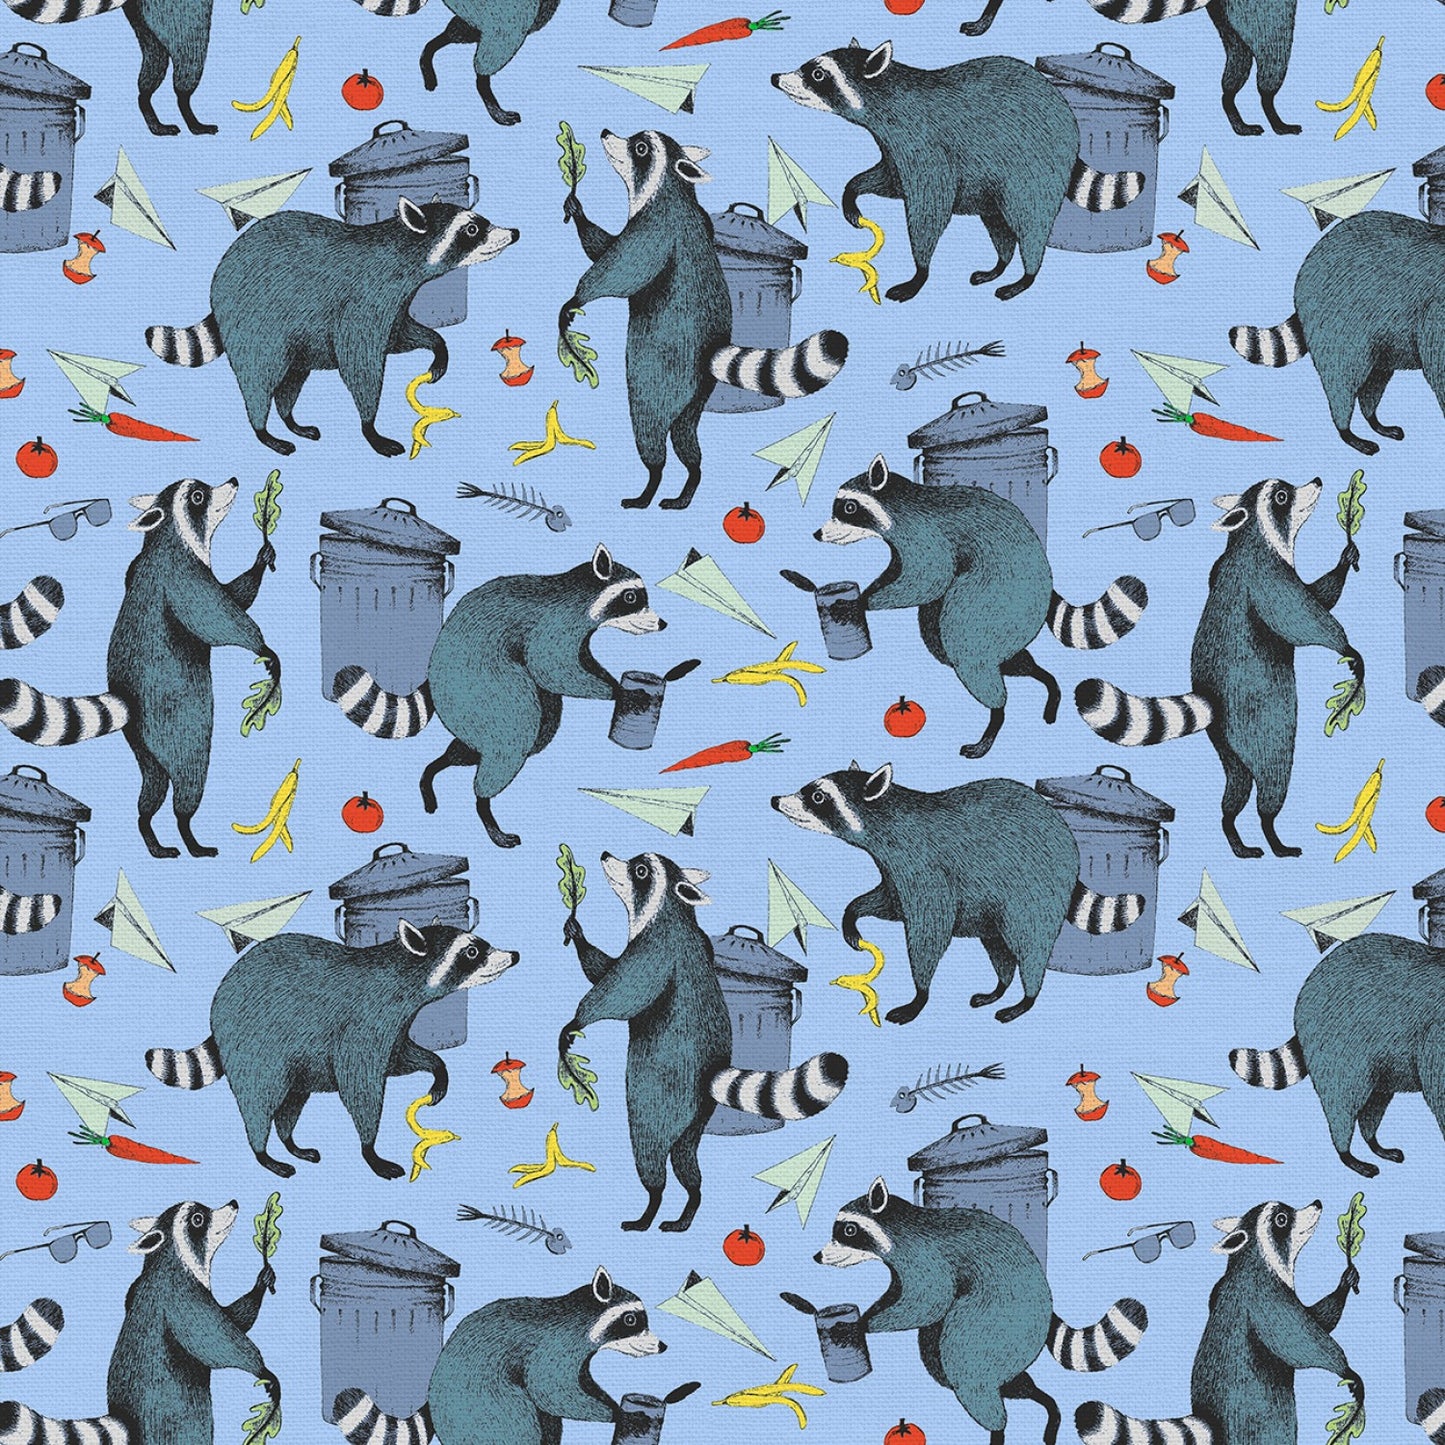 Raccoon Ruckus by Allira Tee Blue 120-22712 Cotton Woven Fabric